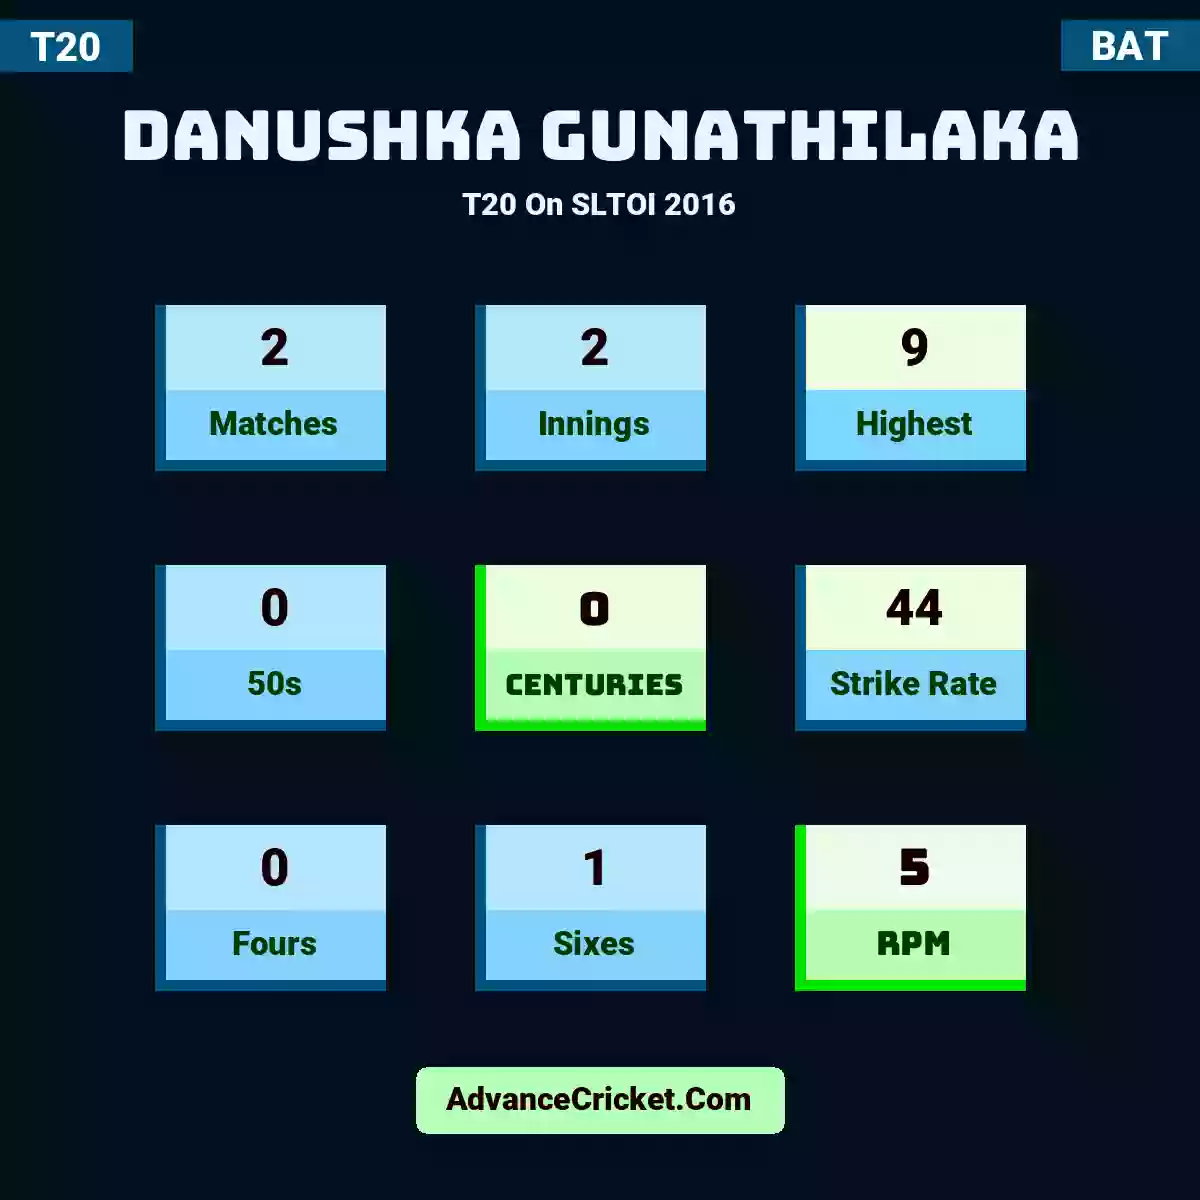 Danushka Gunathilaka T20  On SLTOI 2016, Danushka Gunathilaka played 2 matches, scored 9 runs as highest, 0 half-centuries, and 0 centuries, with a strike rate of 44. D.Gunathilaka hit 0 fours and 1 sixes, with an RPM of 5.